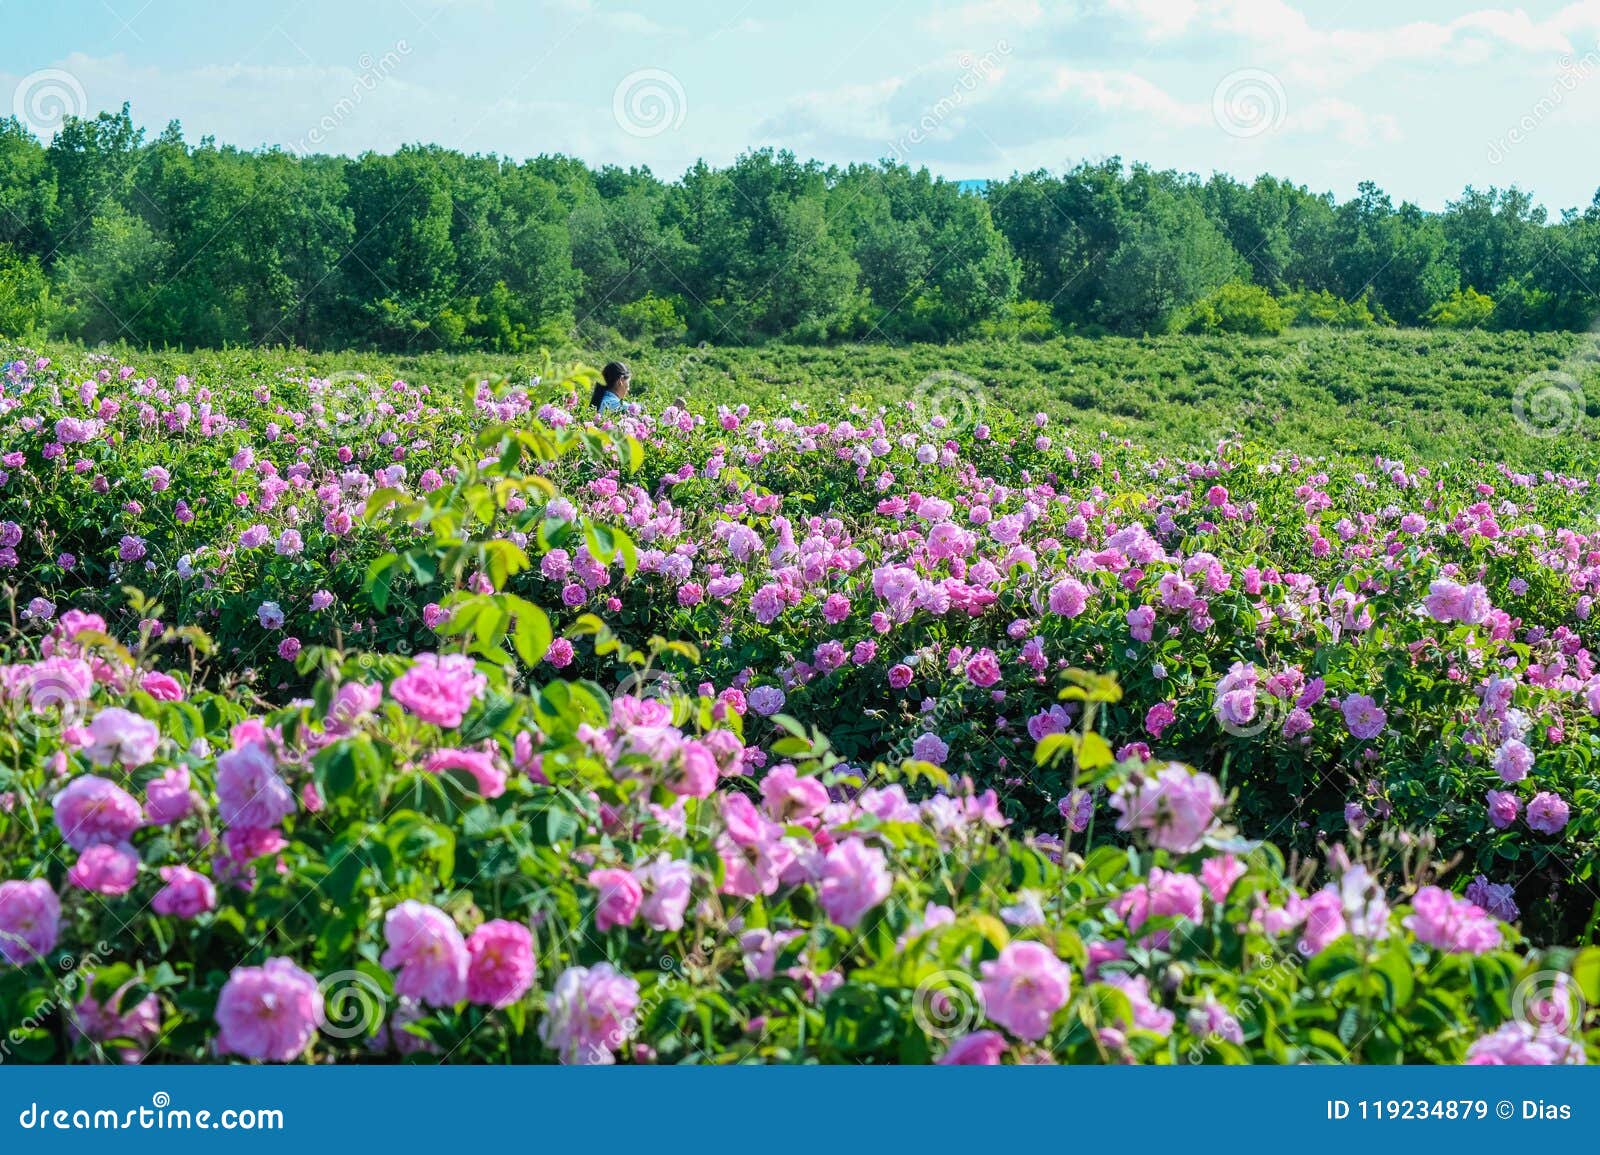 Beautiful Damask Roses In Rose Garden Stock Image Image Of Beautiffull Plant 119234879